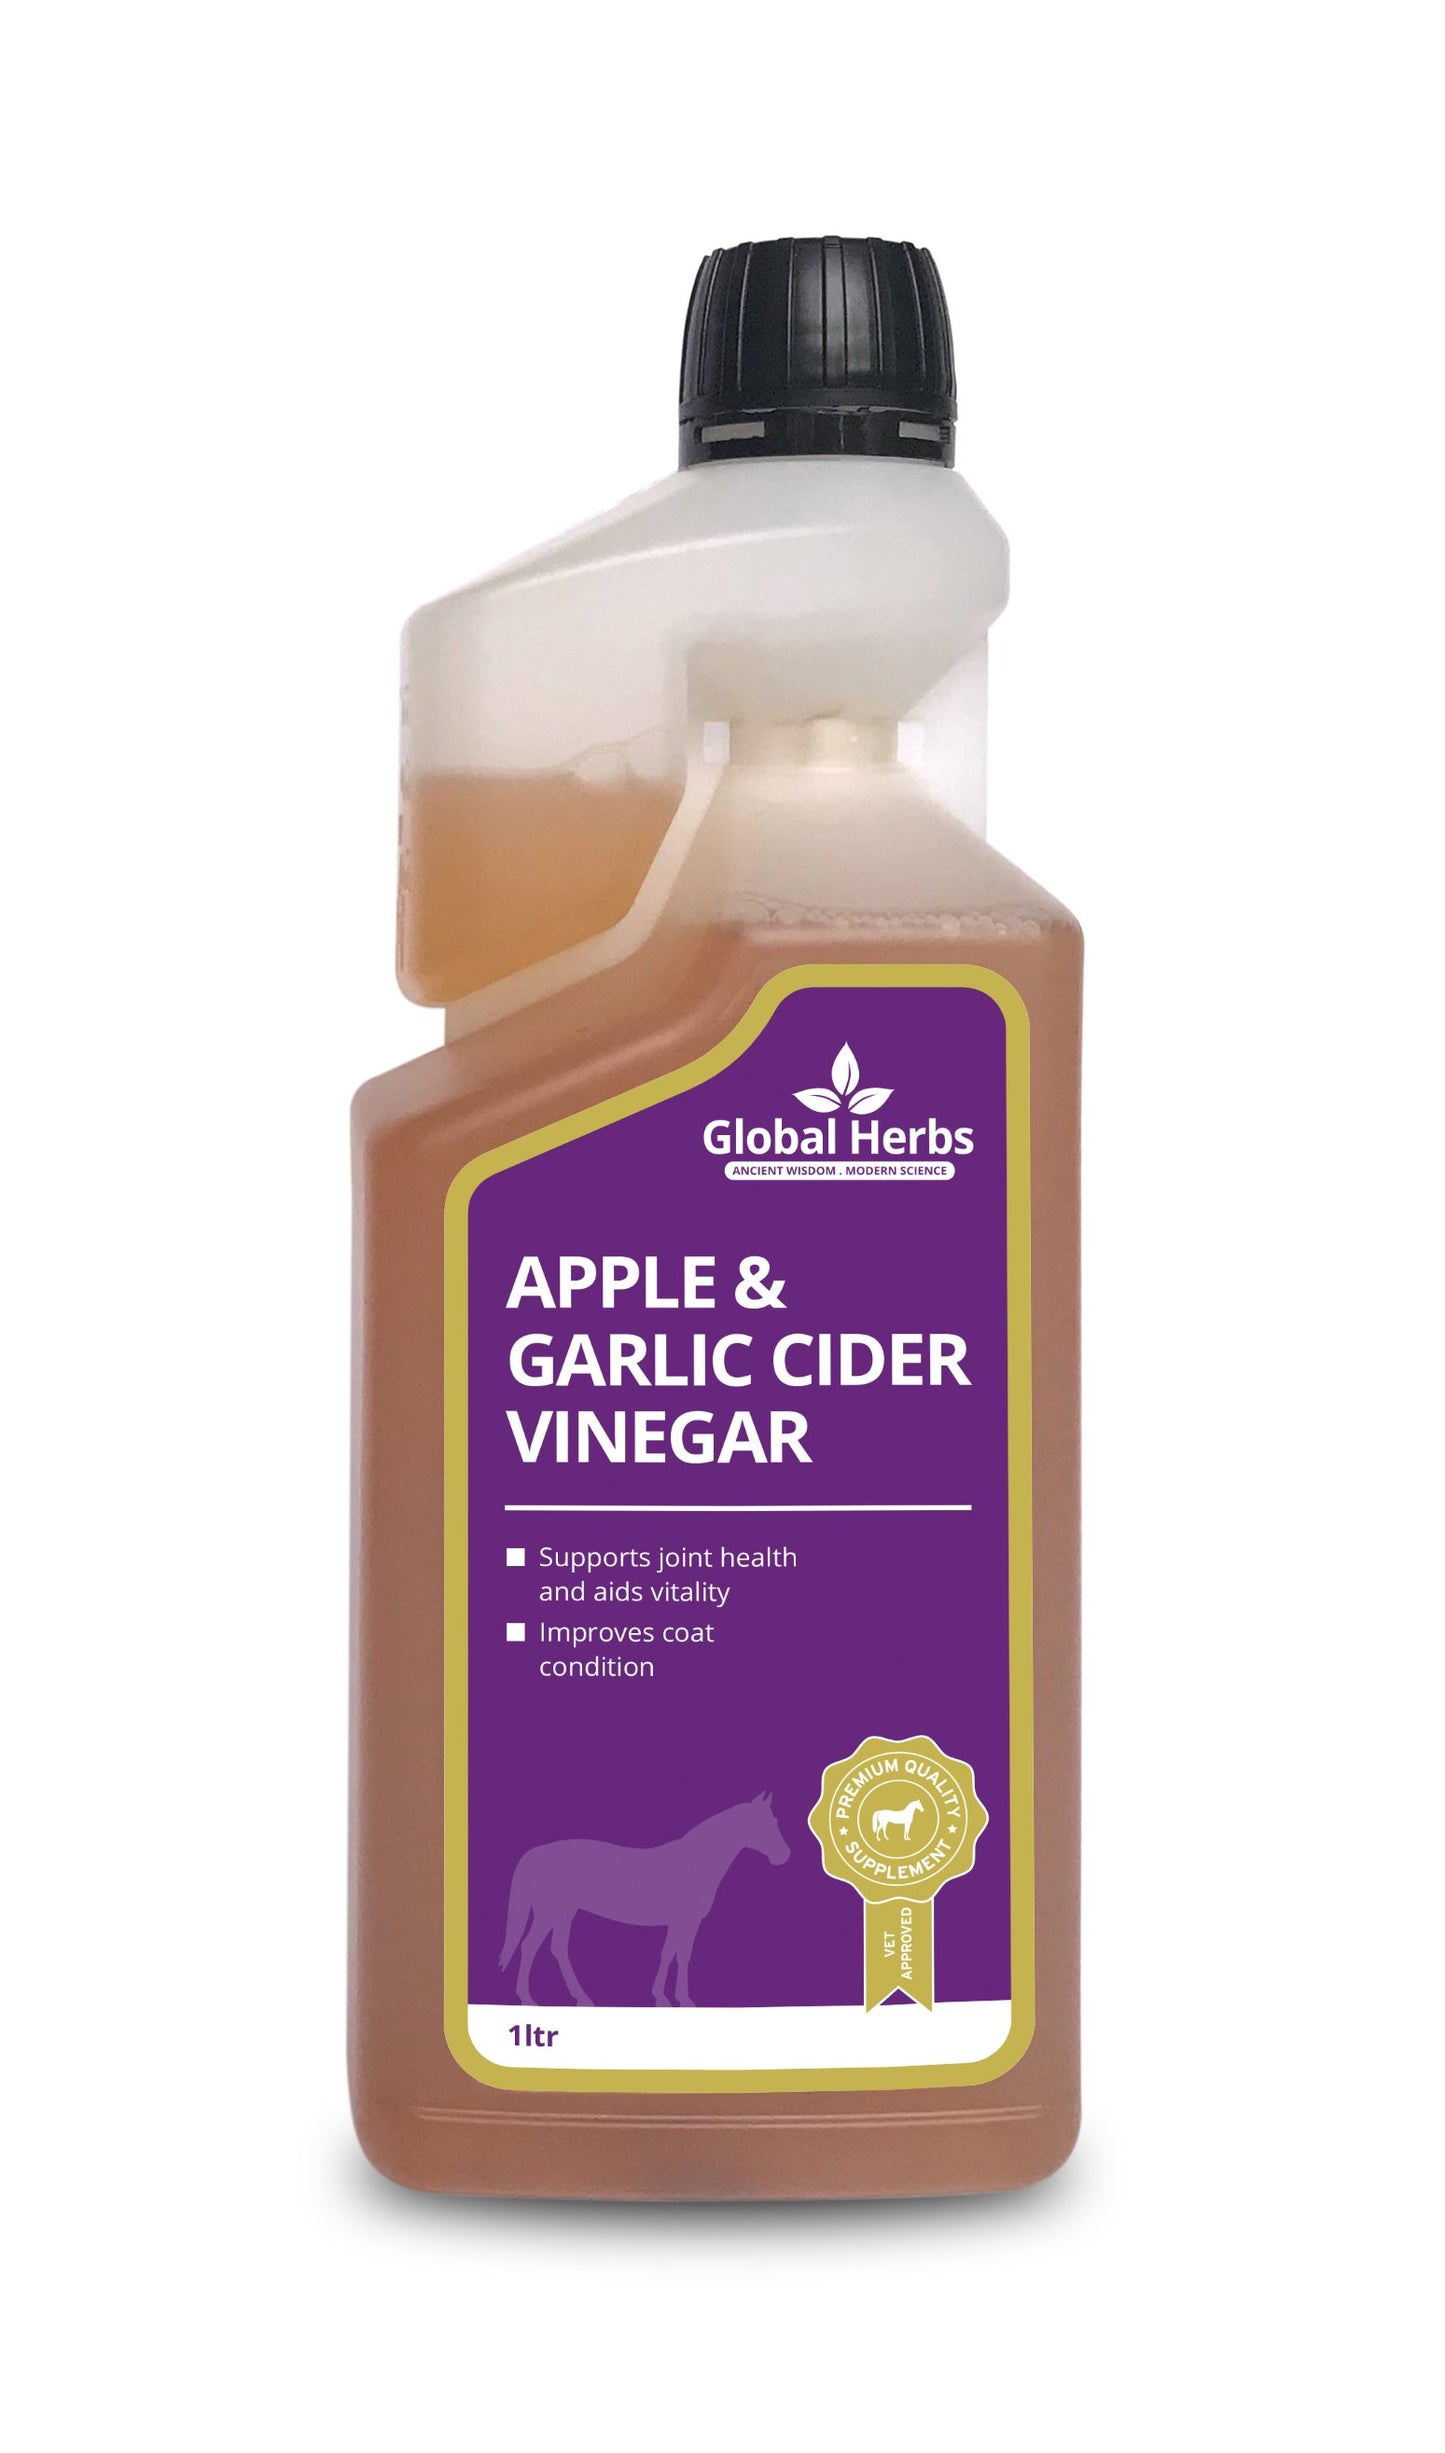 Global Herbs Apple & Garlic Cider Vinegar